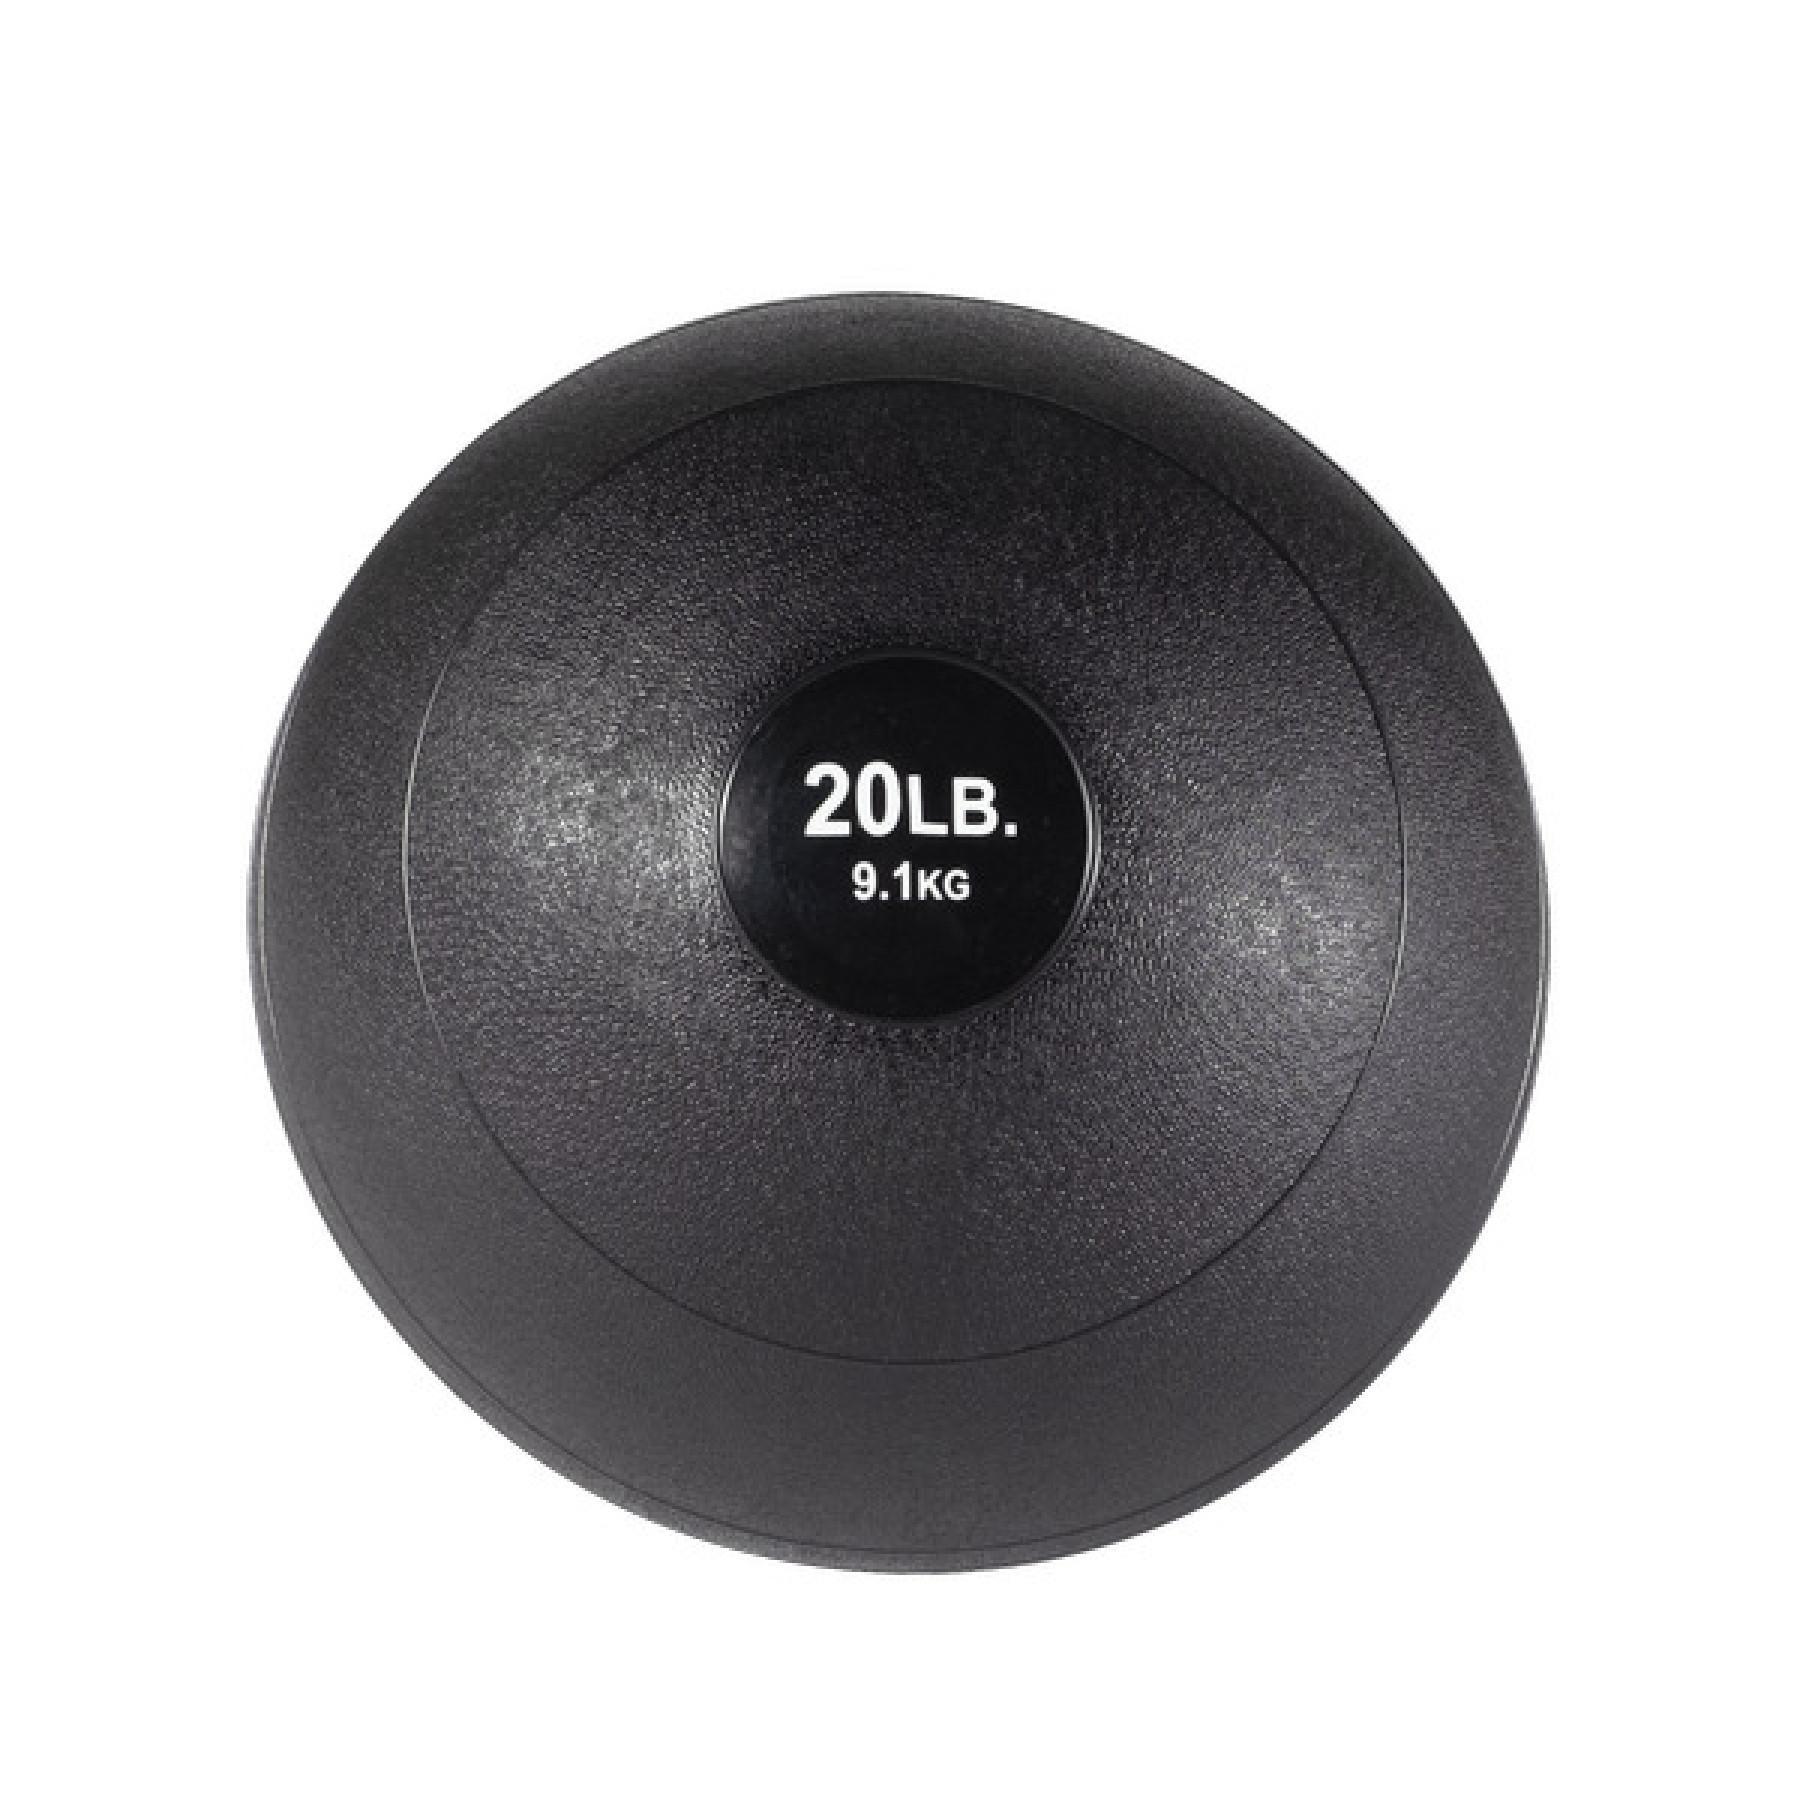 Esfera Slam 10 lb - 4,6 kg Body Solid